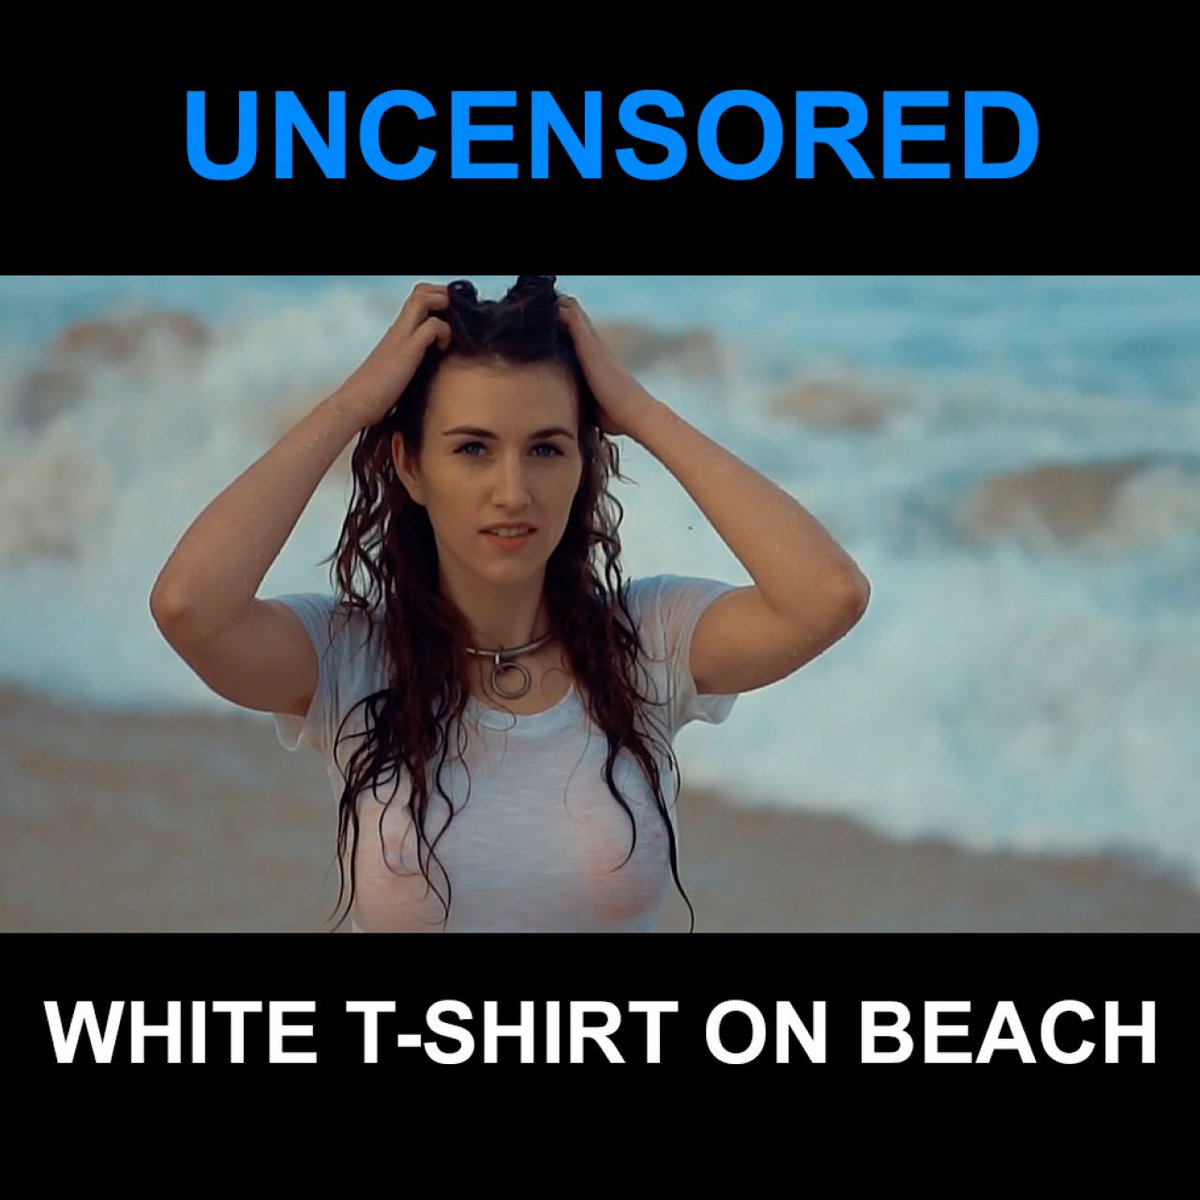 TodayWithPiper on "White T-Shirt Beach: Uncut Version!!! Watch it now: https://t.co/vqzzLas26Y #piper #tshirt #wet #beach https://t.co/A8W7J7mDZw" / Twitter